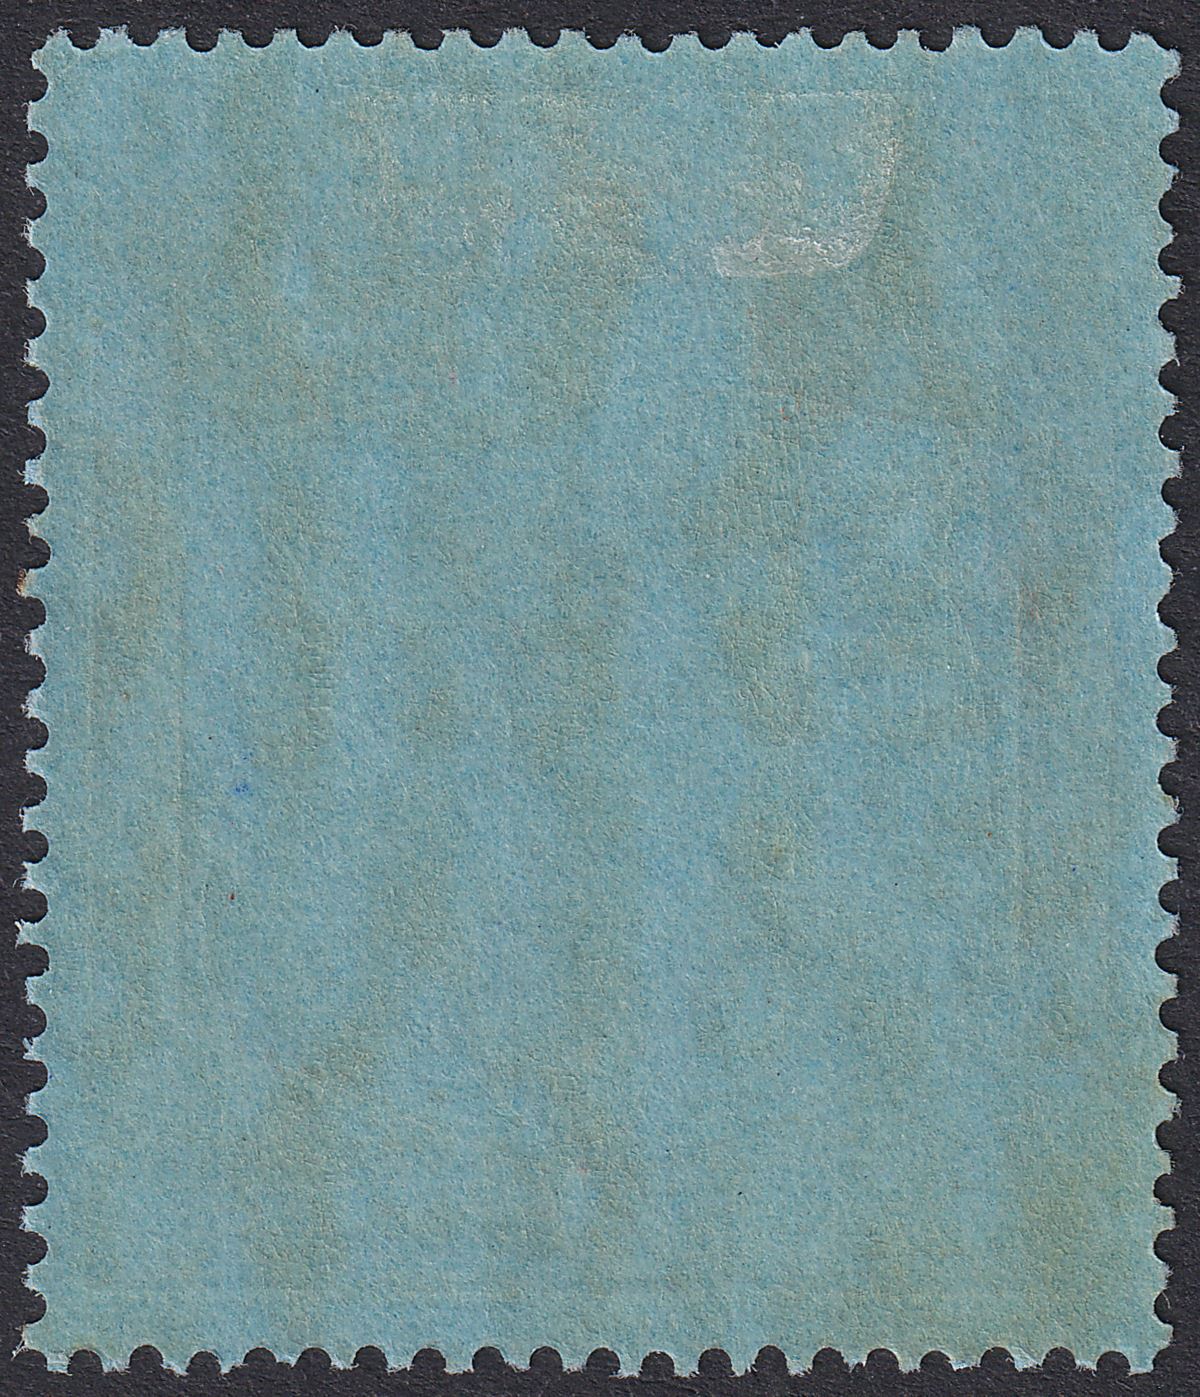 Bermuda 1940 KGVI 2sh6d Black and Carmine-Red on Grey-Blue p14 Mint SG117